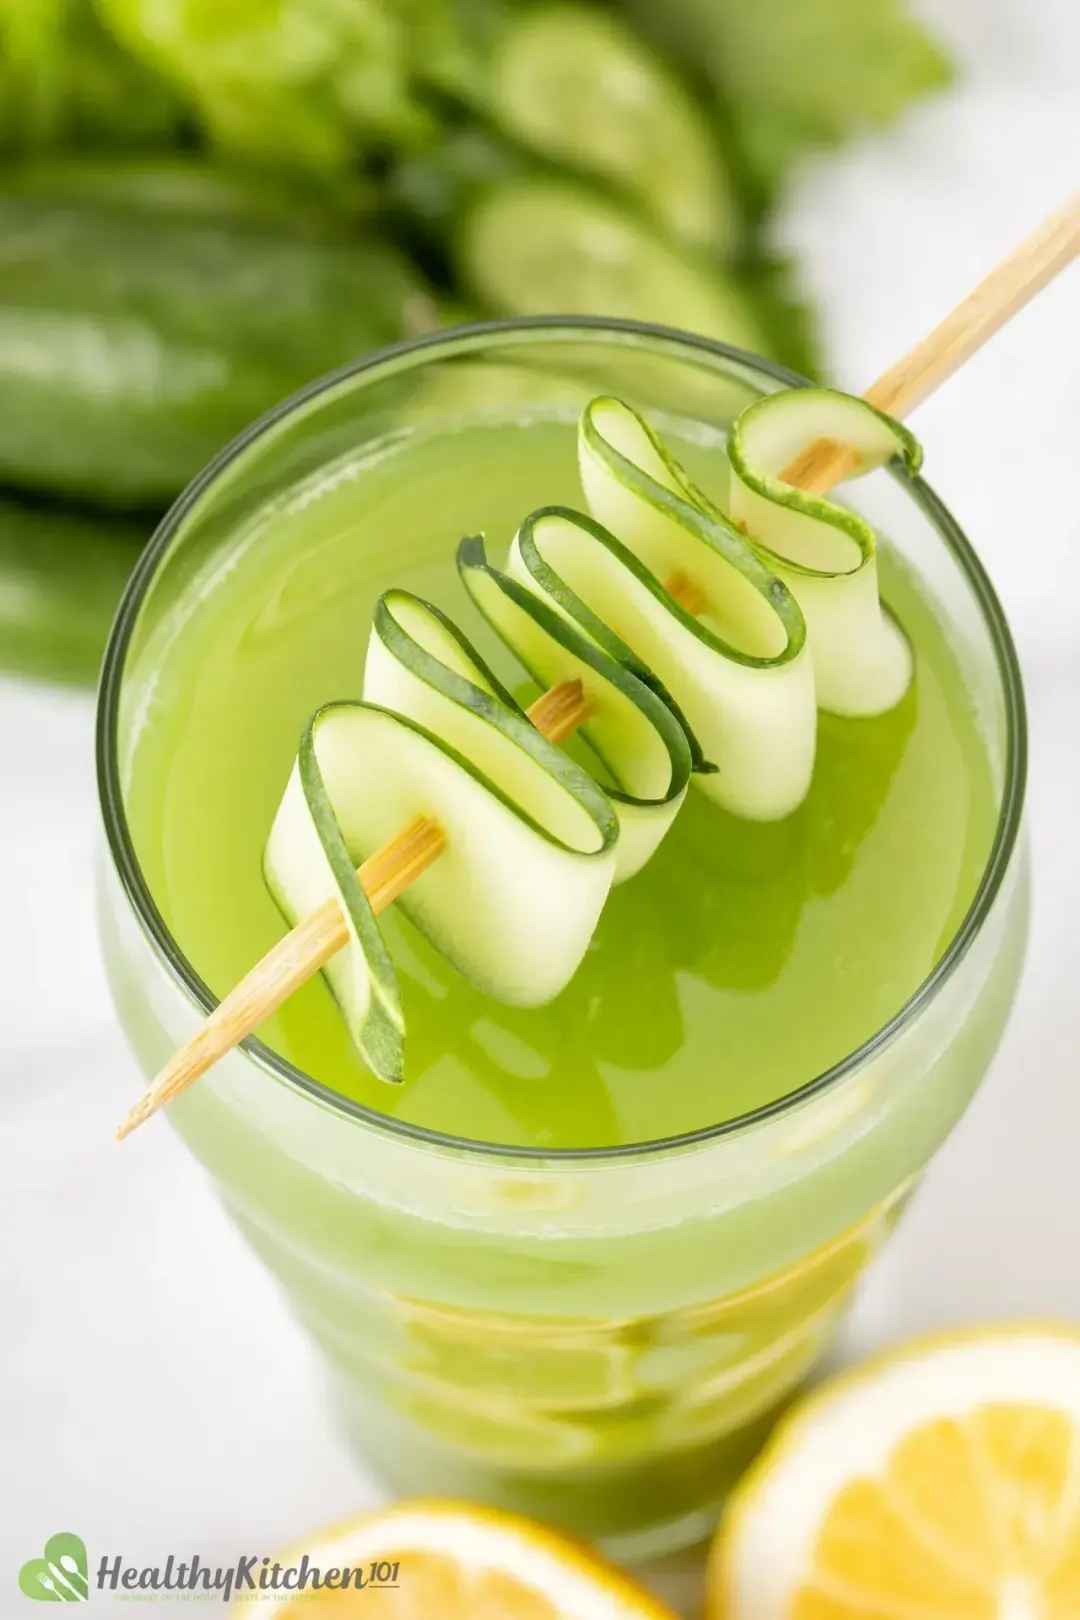 How Long Does Celery Cucumber Juice Last